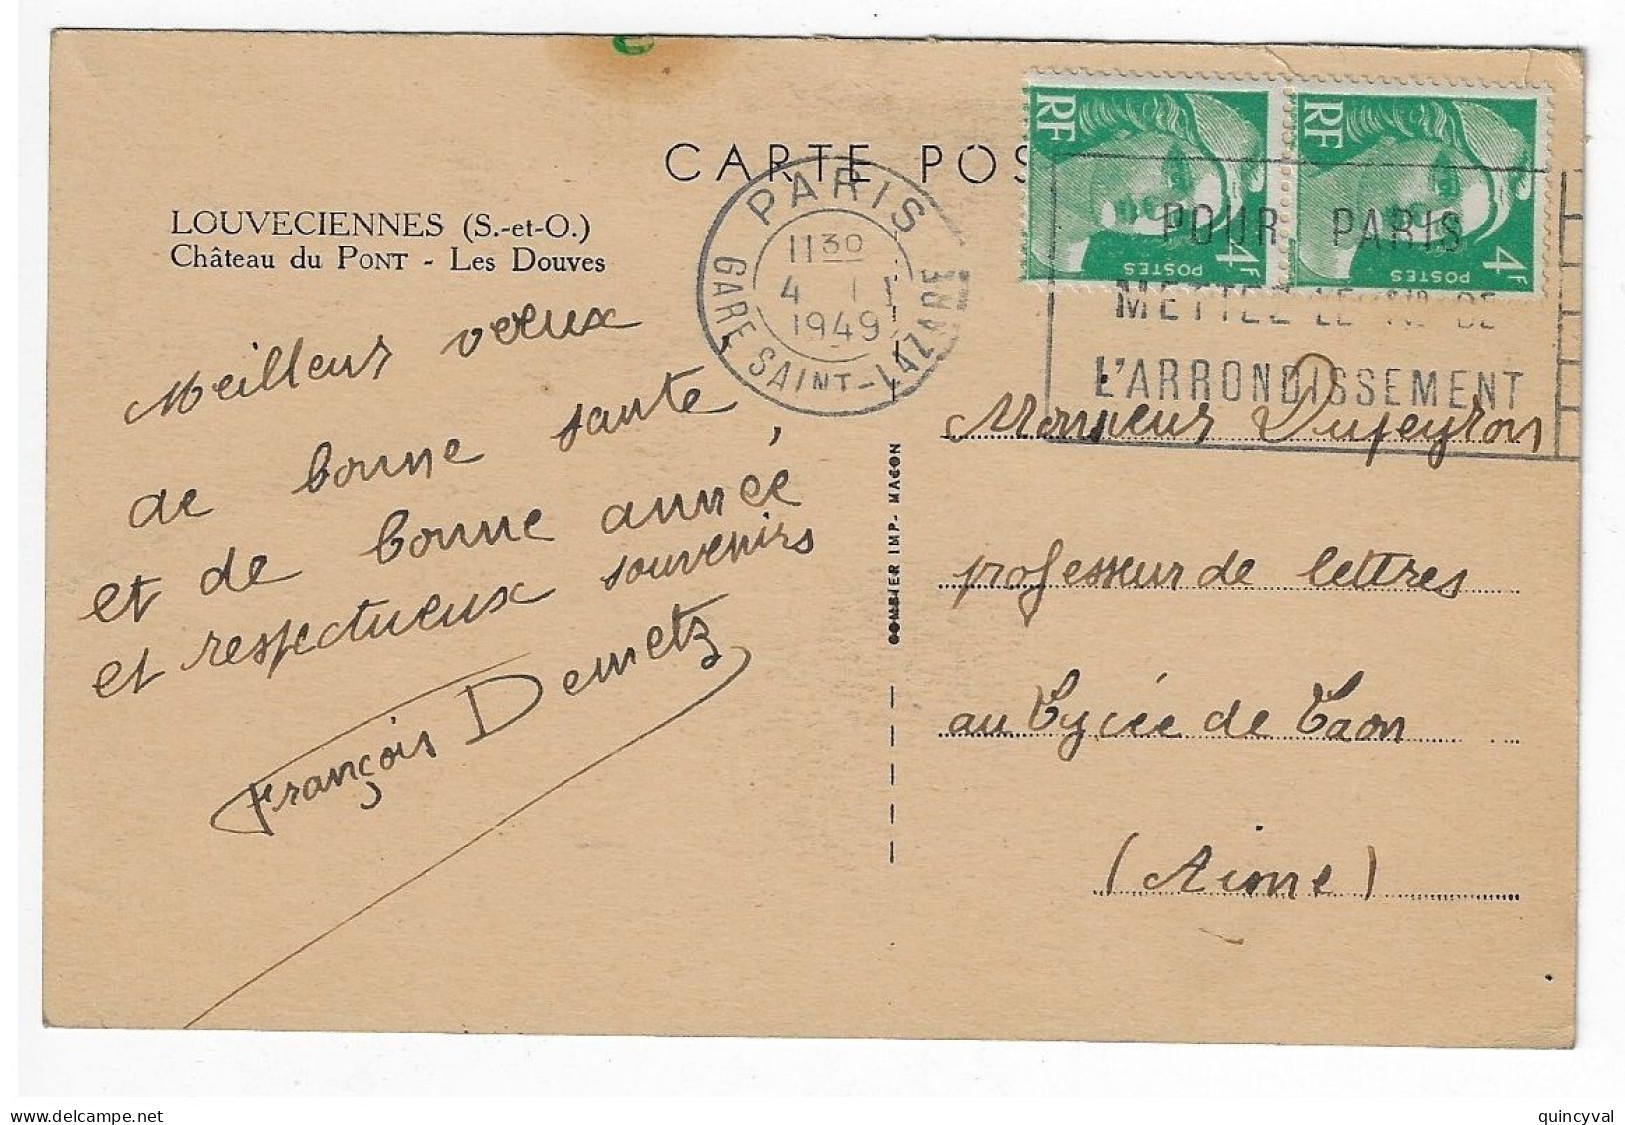 PARIS Gare St Lazare Carte Postale 4 F Gandon Vert Emeraude X 2 Ob Meca 4 1 1949 - 1945-54 Marianne (Gandon)